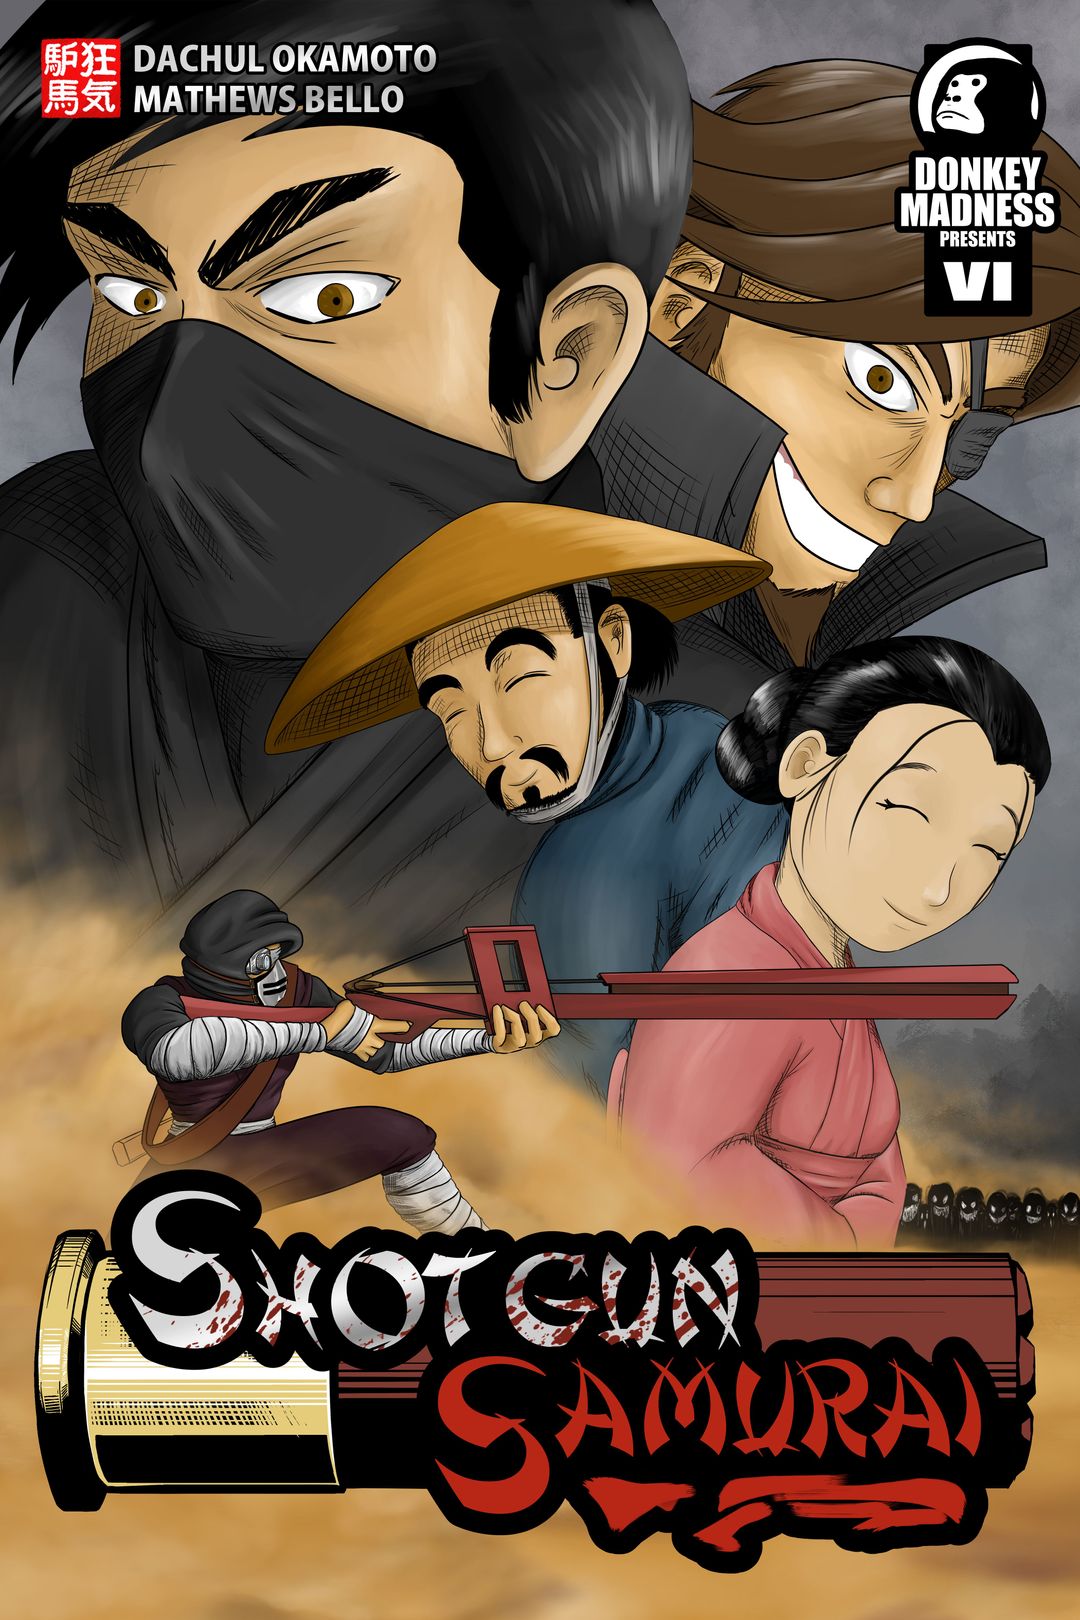 Shotgun Samurai 24 panel 1